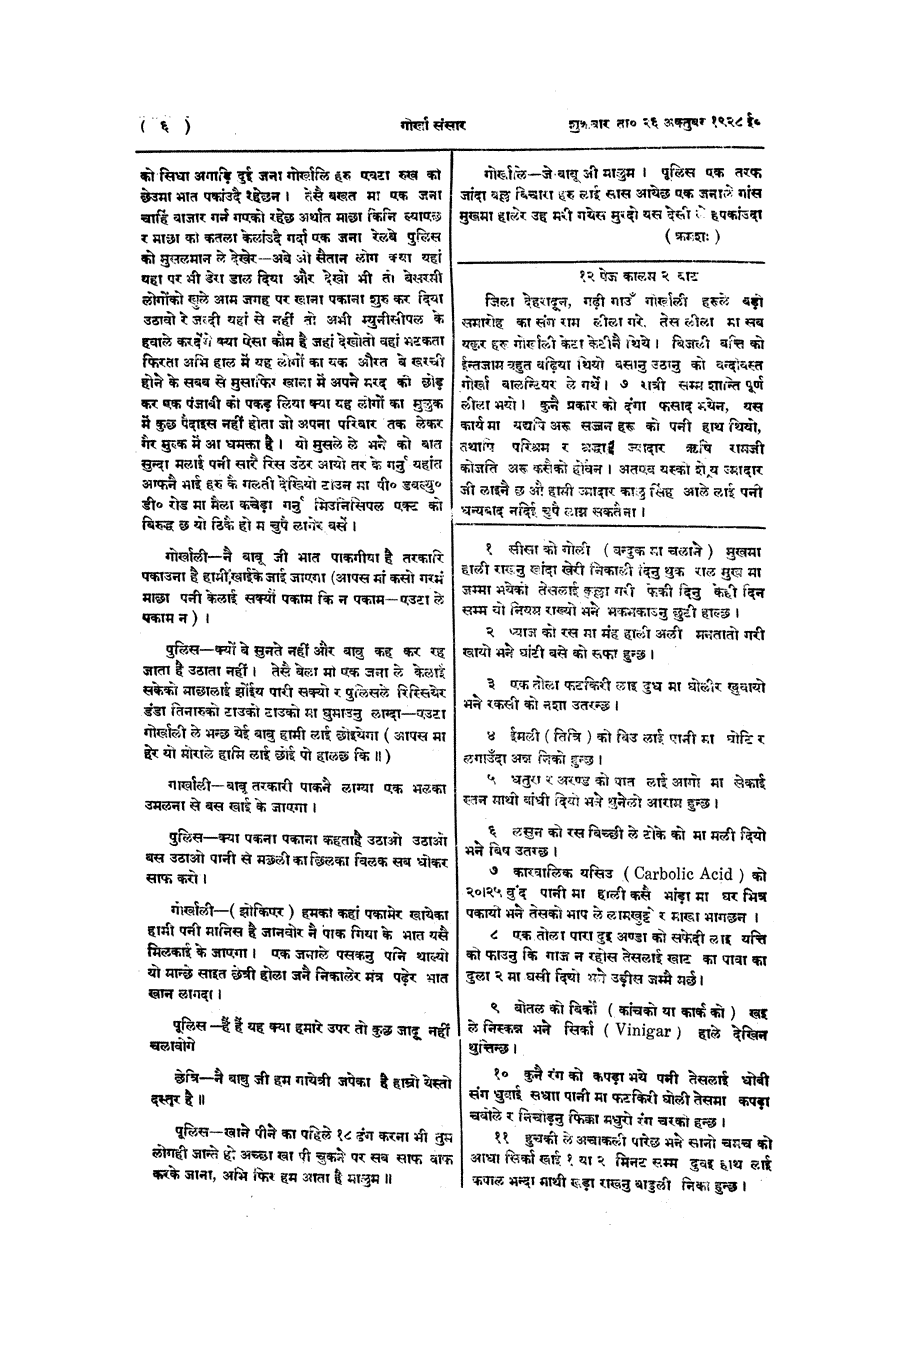 Gorkha Sansar, 26 Oct 1928, page 6